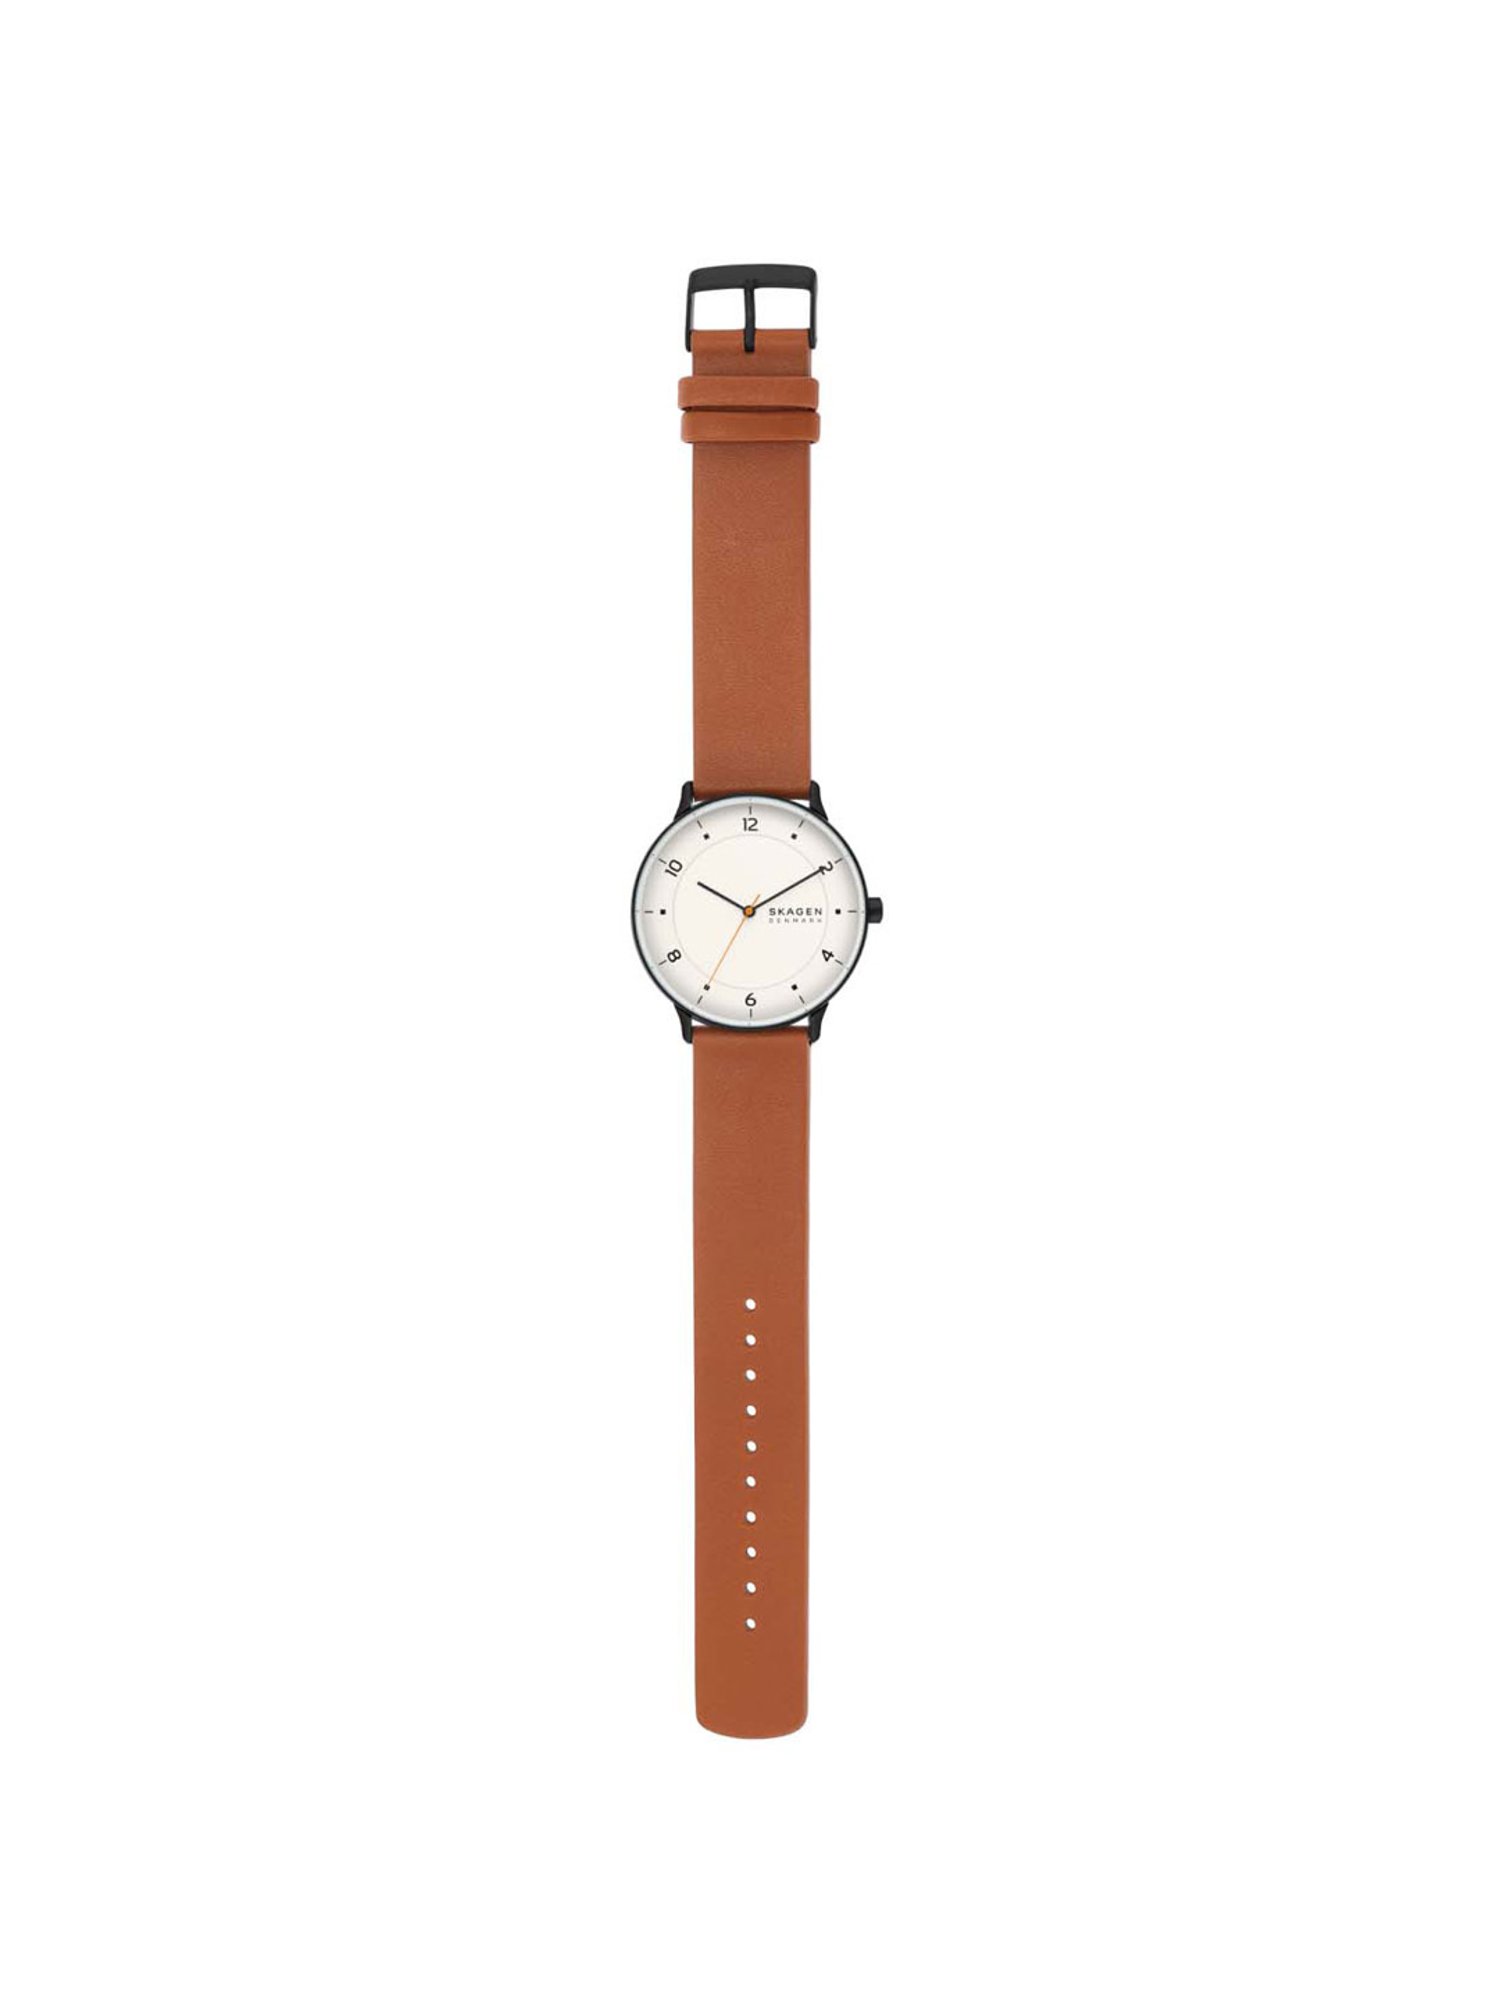 Buy Skagen Riis SKW6883 Analog Watch for Men at Best Price @ Tata CLiQ